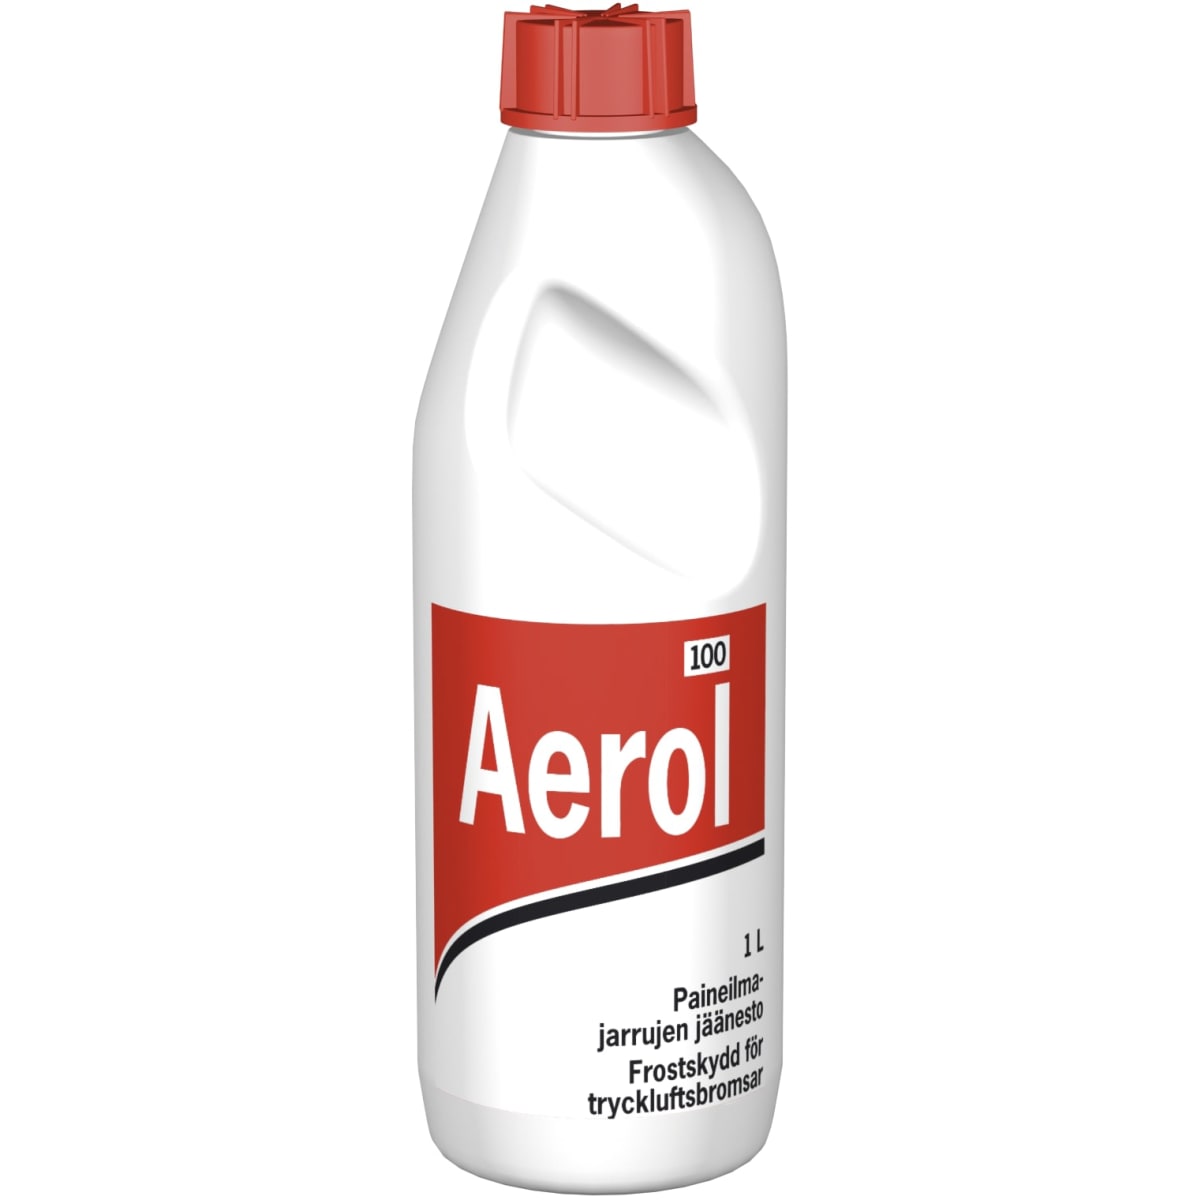 Aerol-100 1L paineilmajarrujen jäänestoaine  verkkokauppa